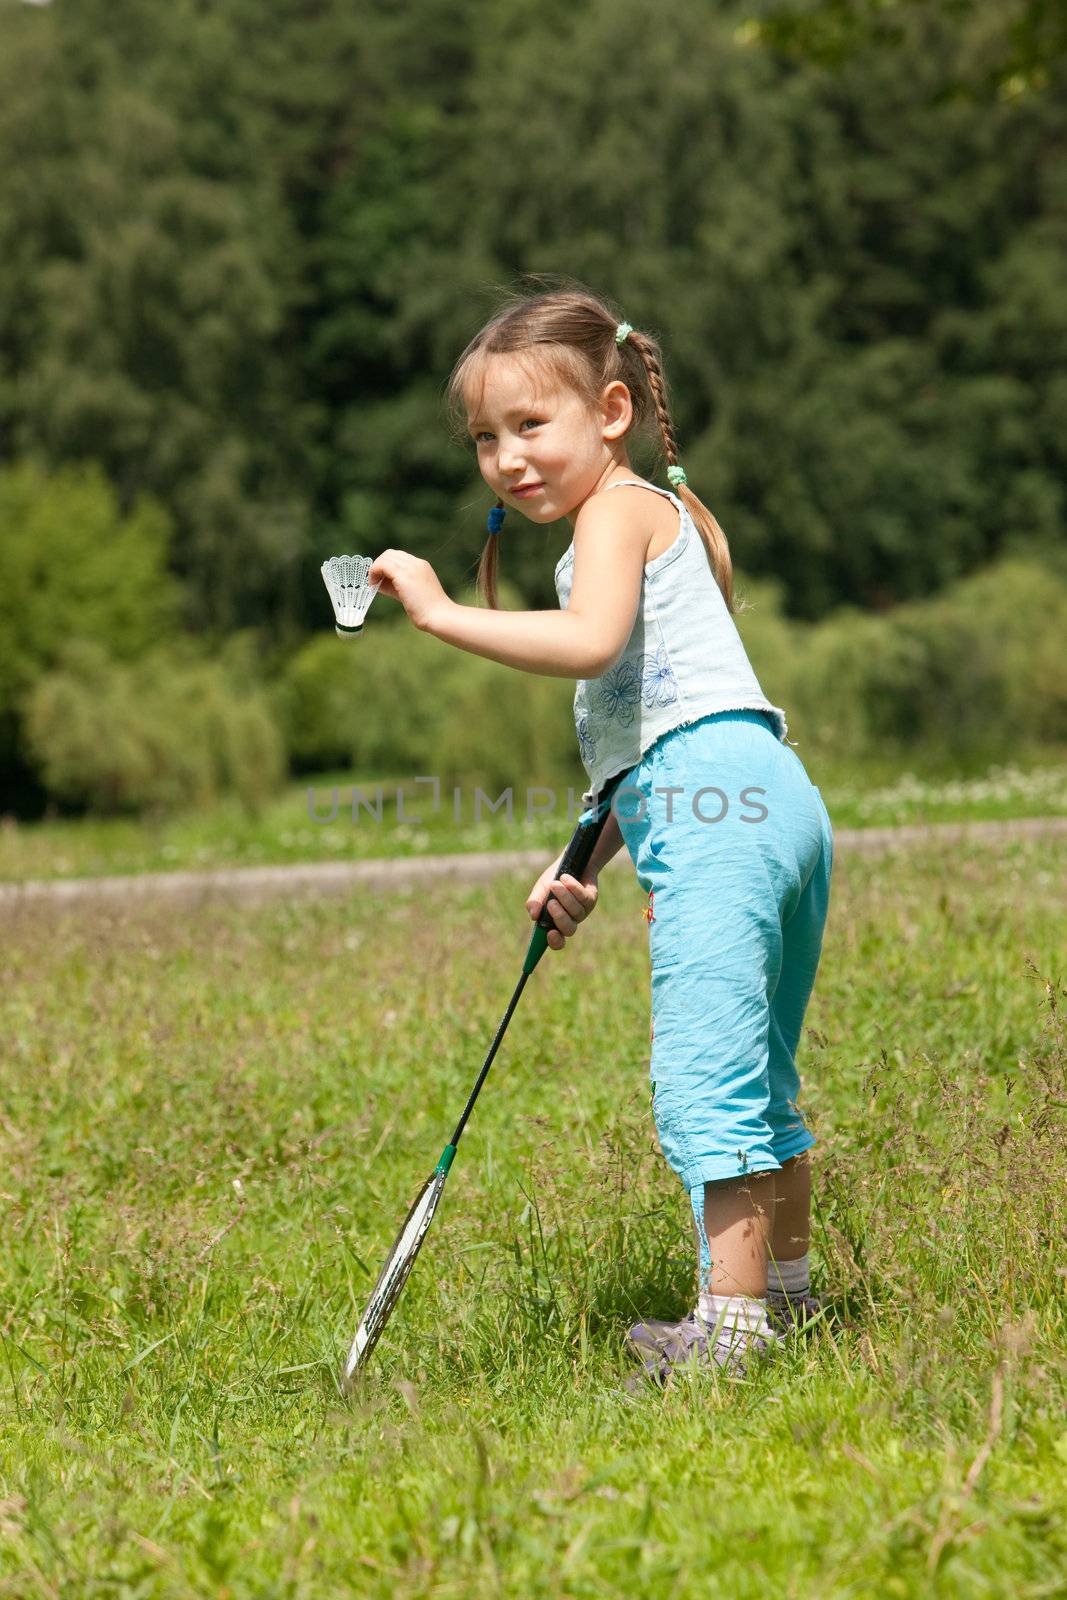 Little girl holding a badminton racket and shuttlecock